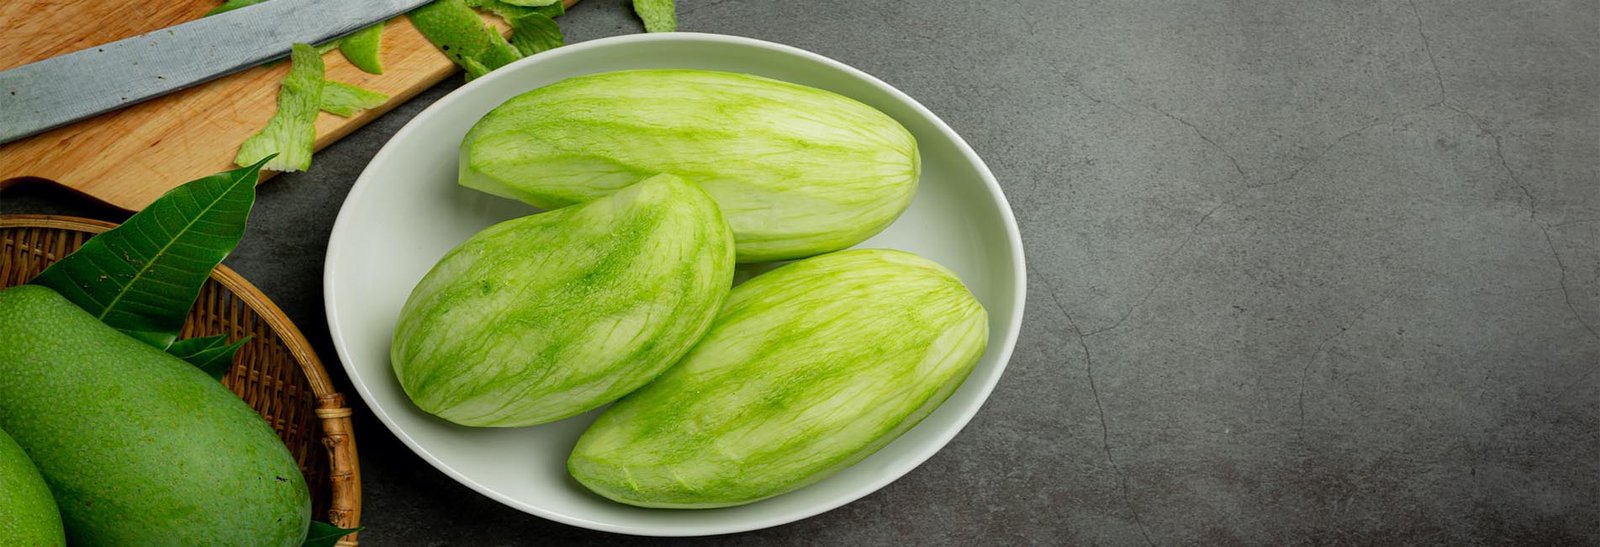 Buy Homemade Pickles Online at Low Price | Dhauladhar Pickles